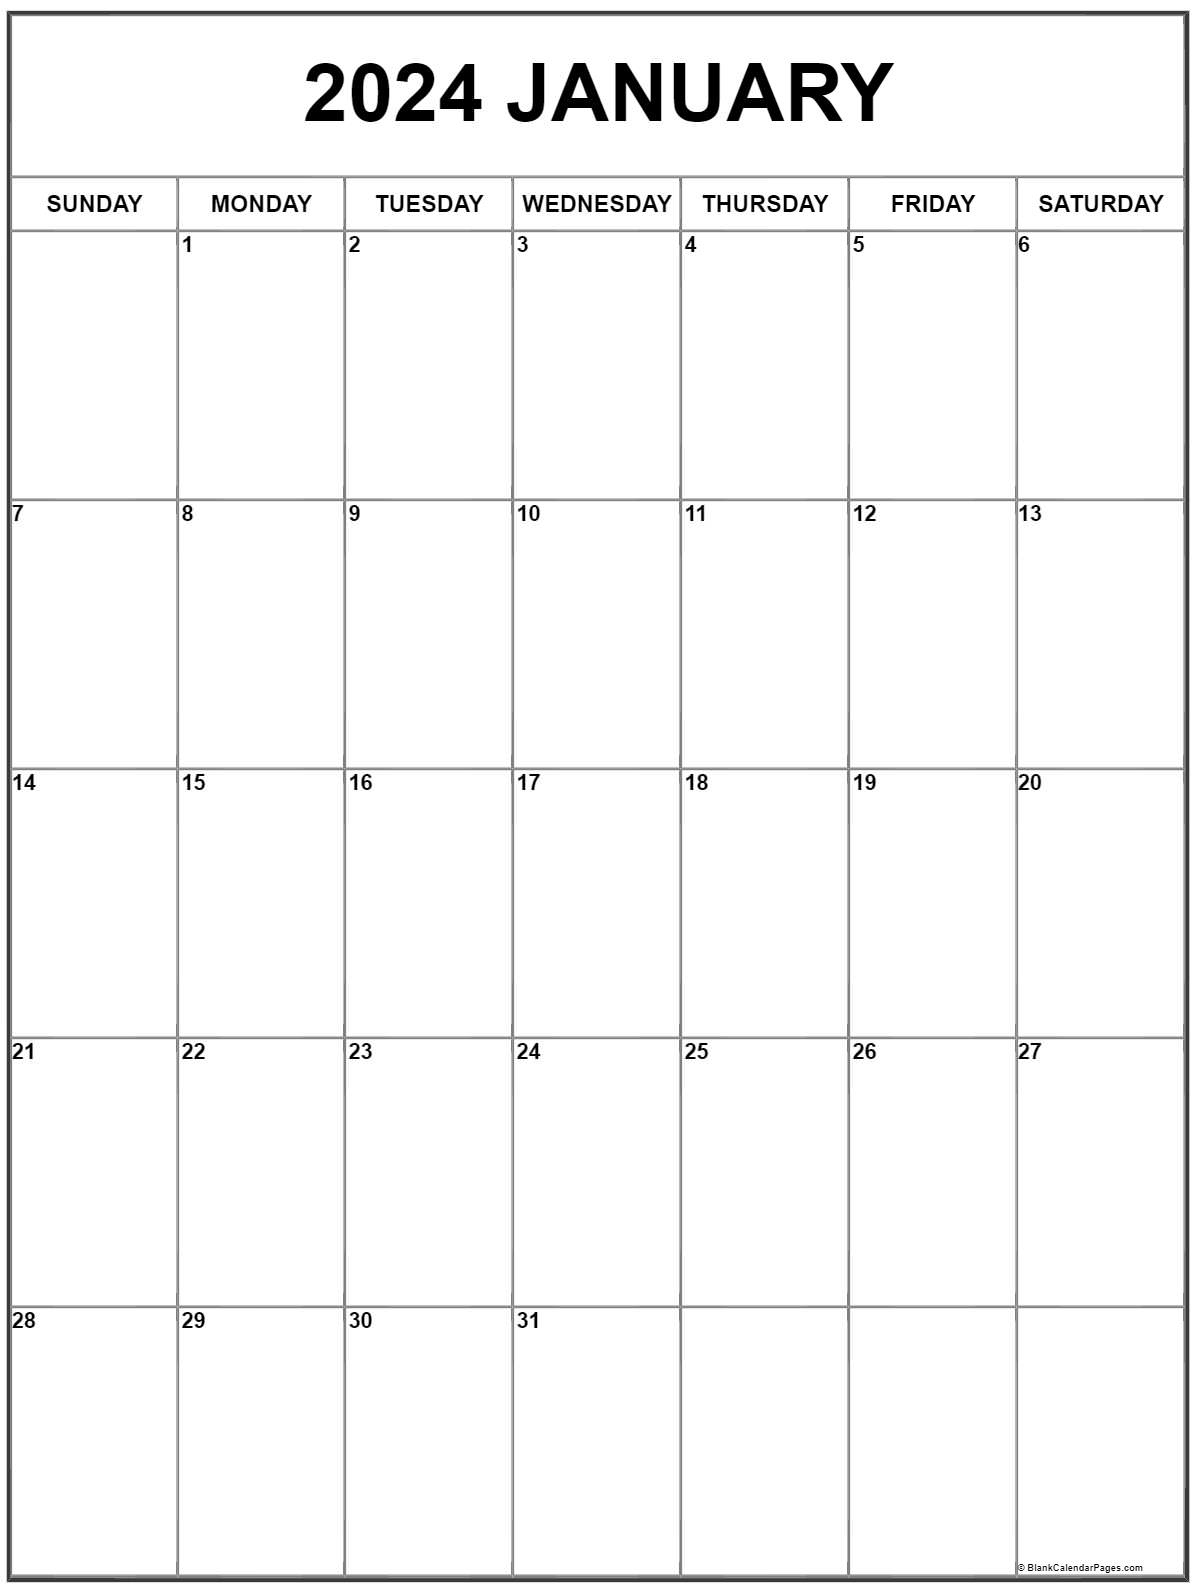 2024 Printable Calendar By Month Vertical Lotti Rhianon - Free Printable 2024 Calendar Vertical